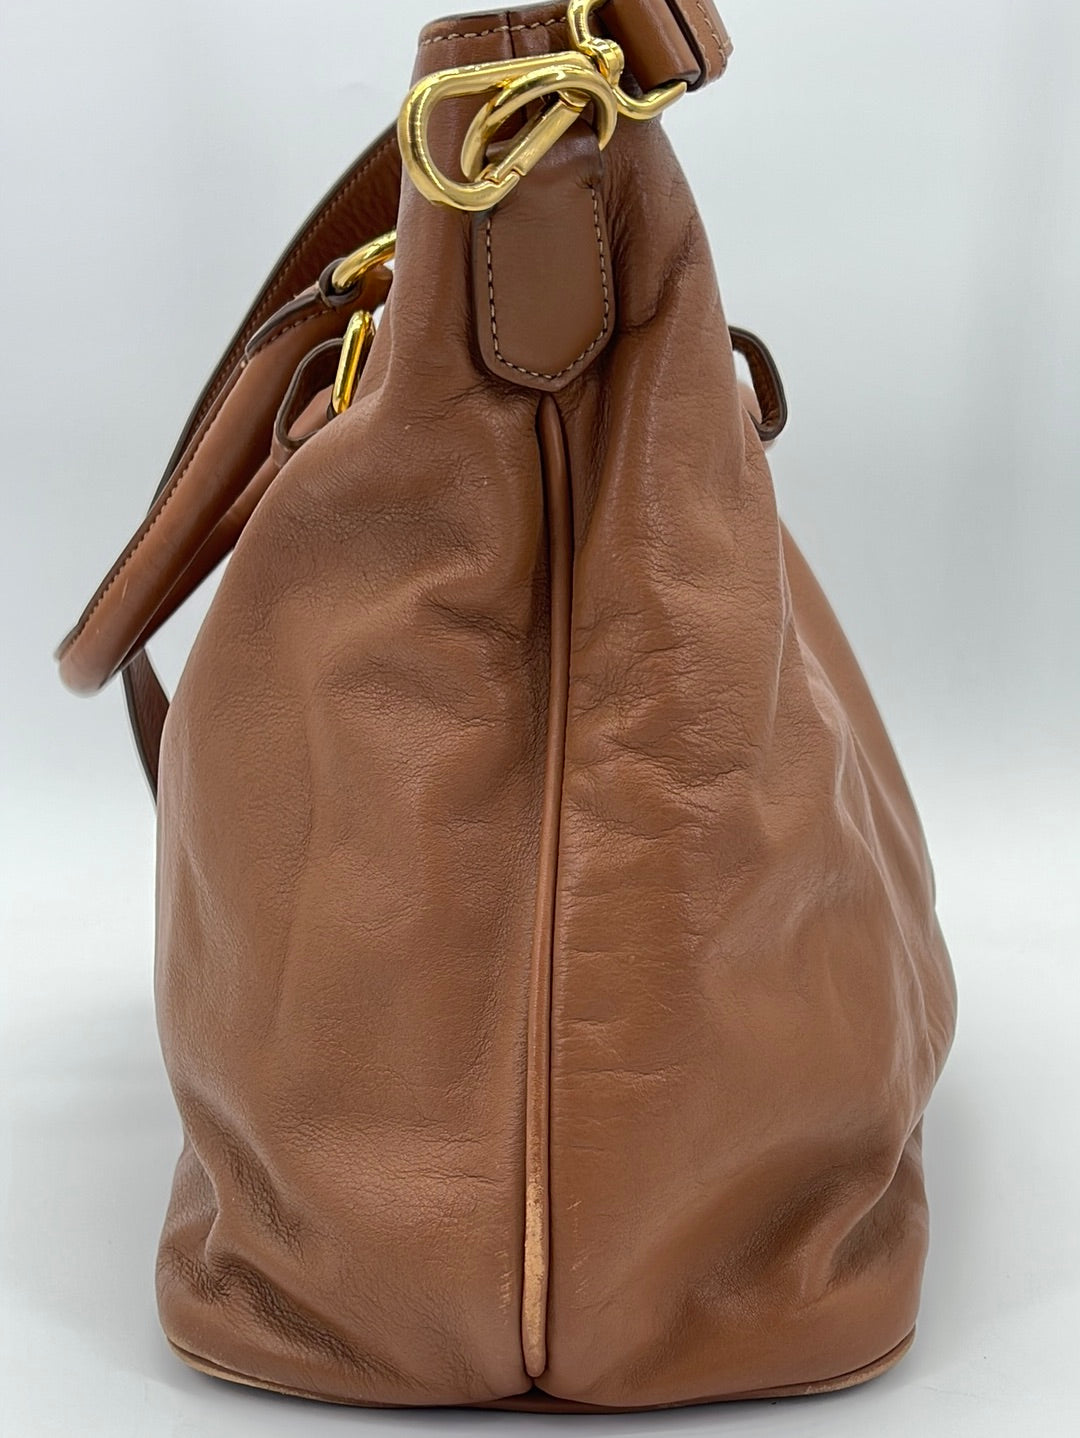 Prada Hand Shoulder Bag Purse Dark Green Leather Vitello Daino 129